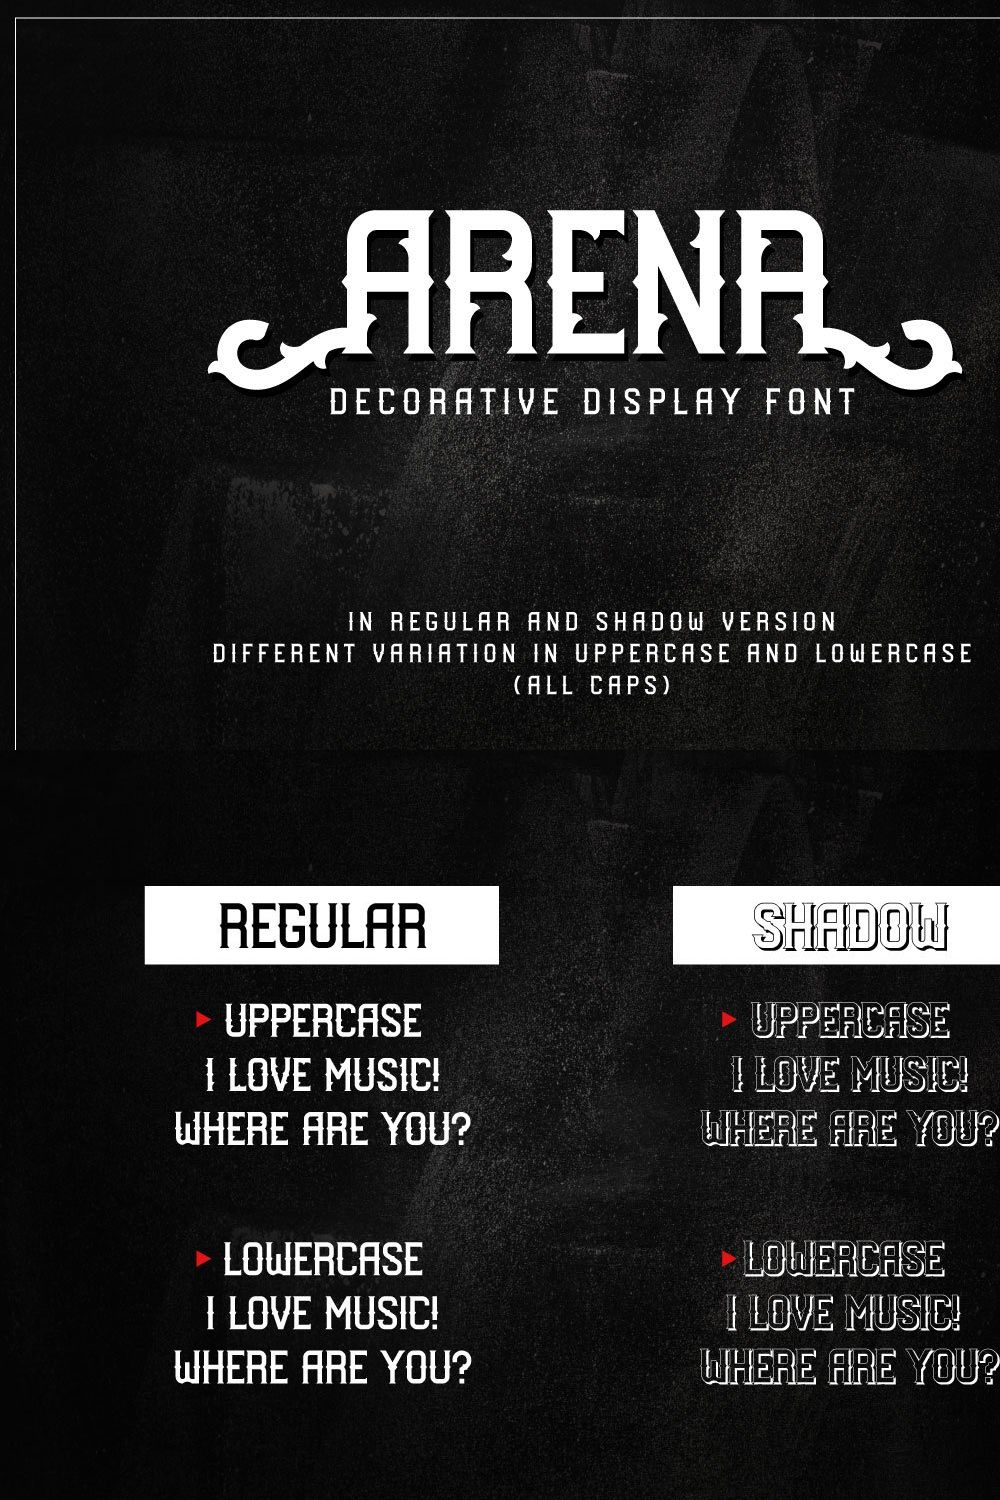 Arena - Decorative Display Font pinterest preview image.